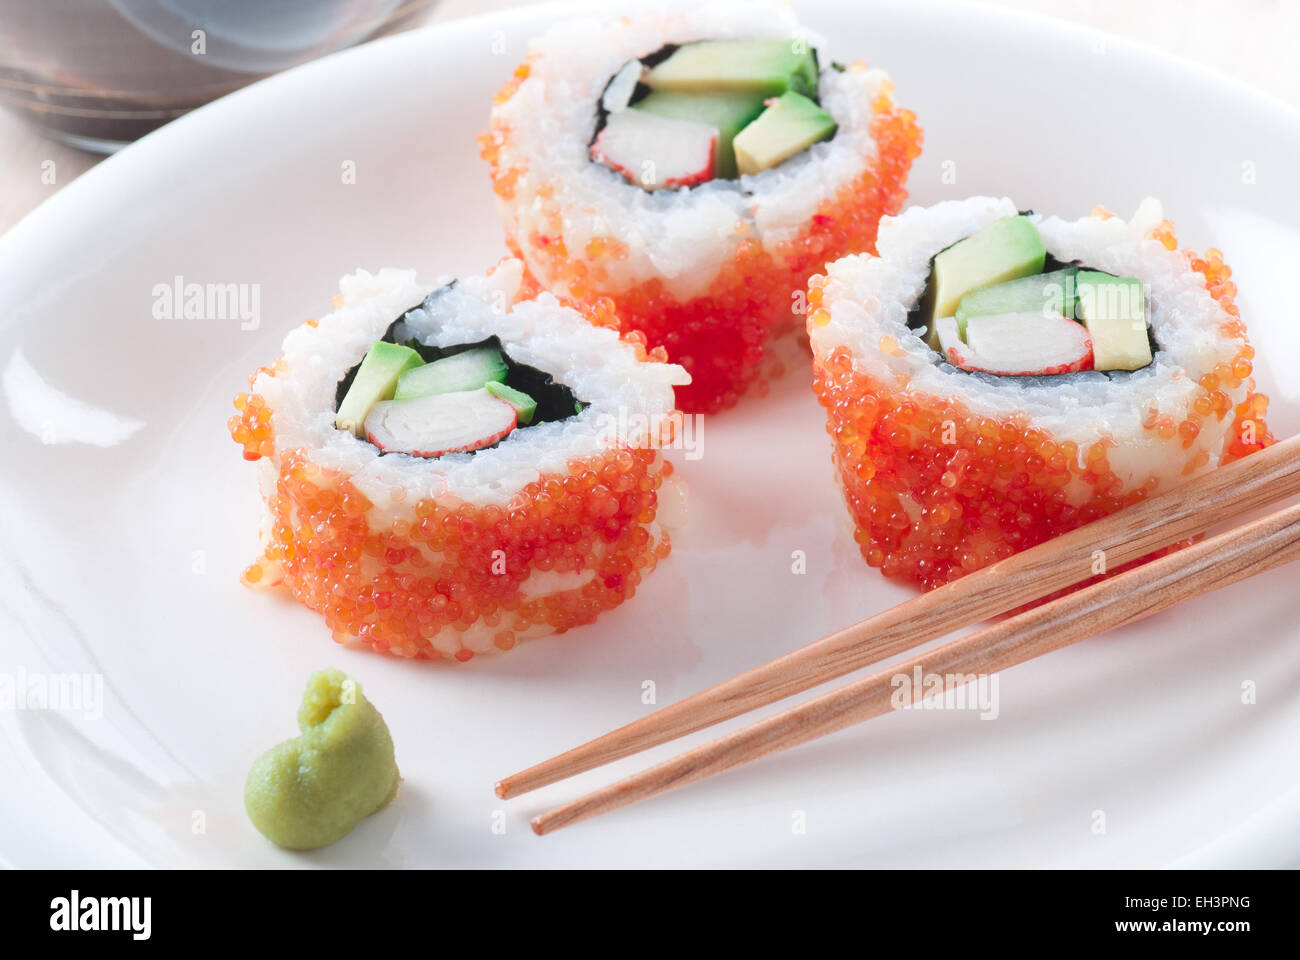 Maki Sushi California rolls with wasabi and soy sauce Stock Photo - Alamy